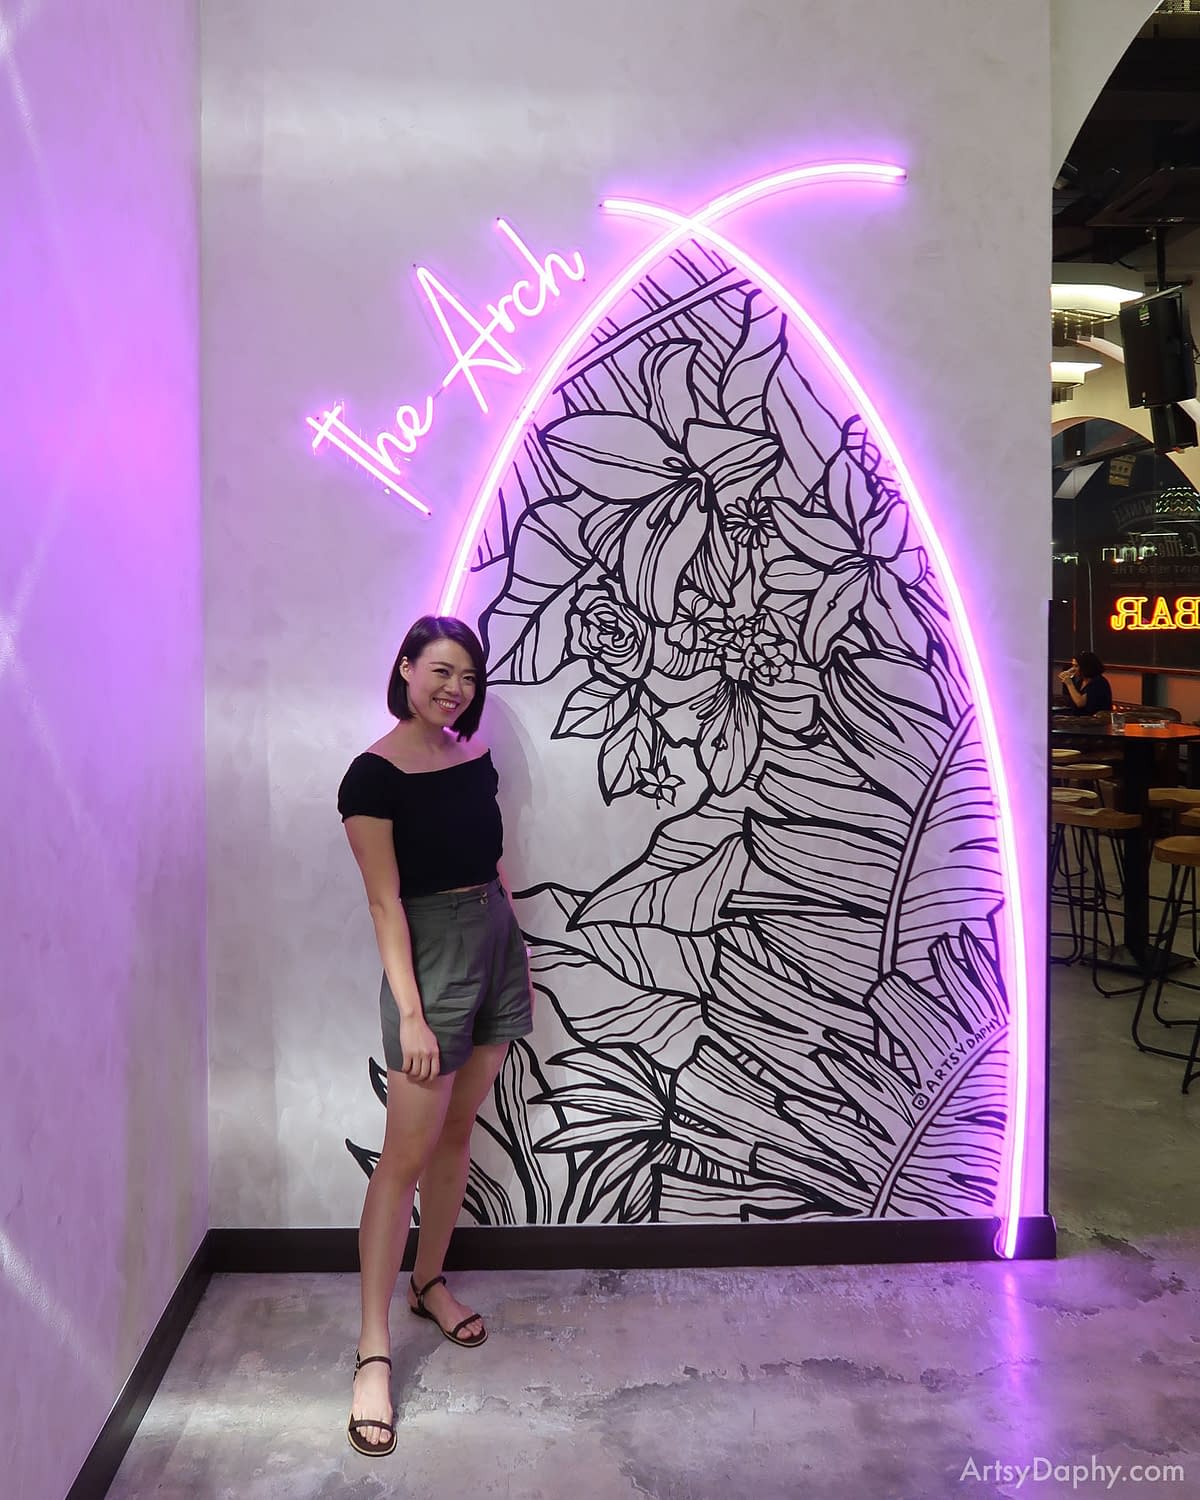 neon light mix line art mural and typography in thai restaurant hartamas, kuala lumpur